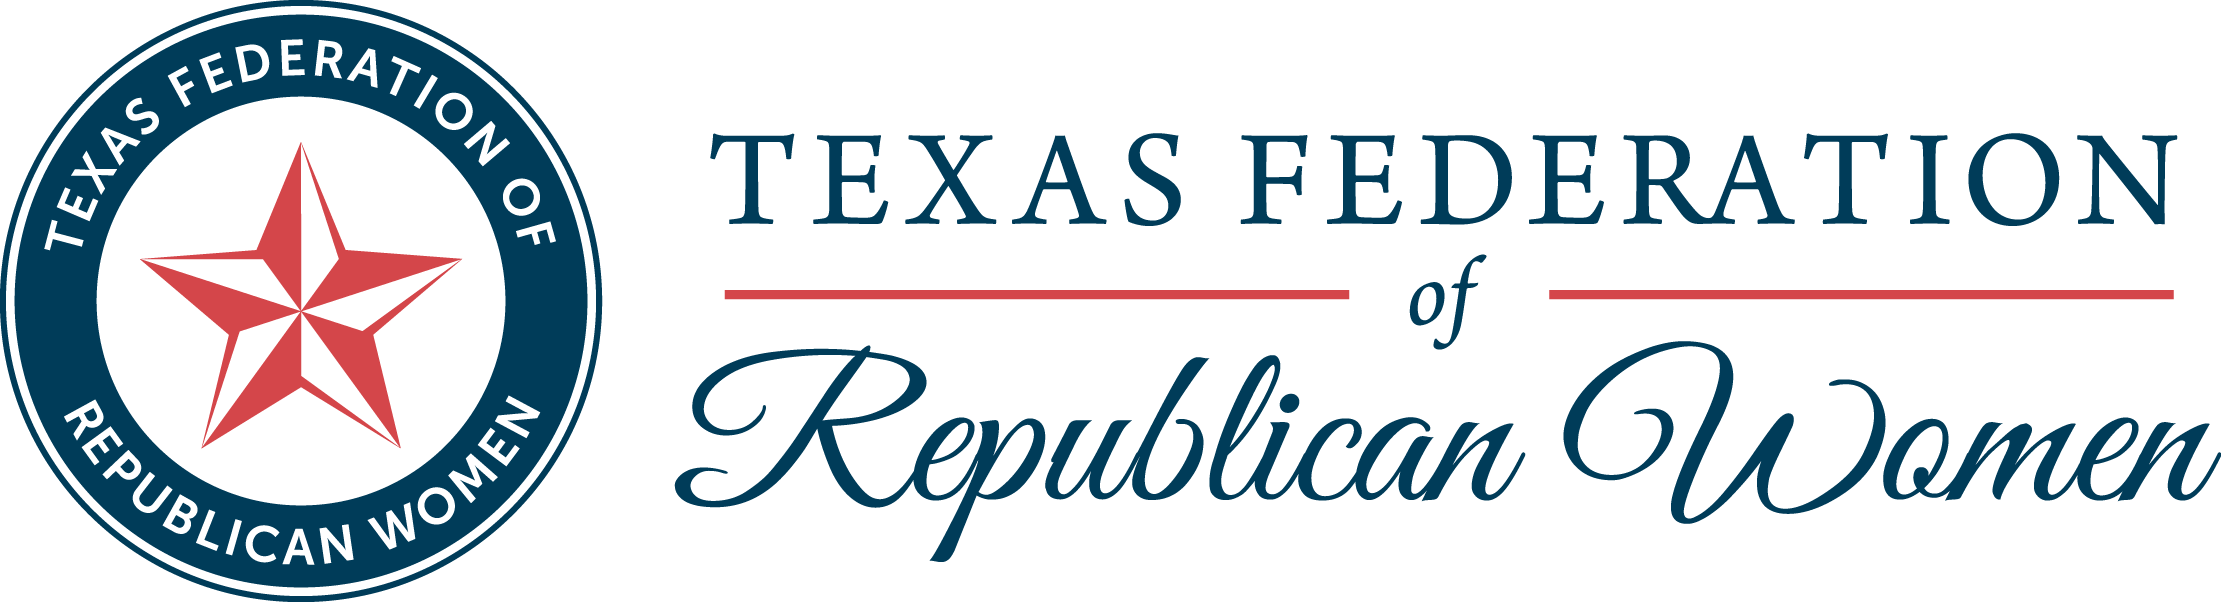 Texas Federation of Republican Women